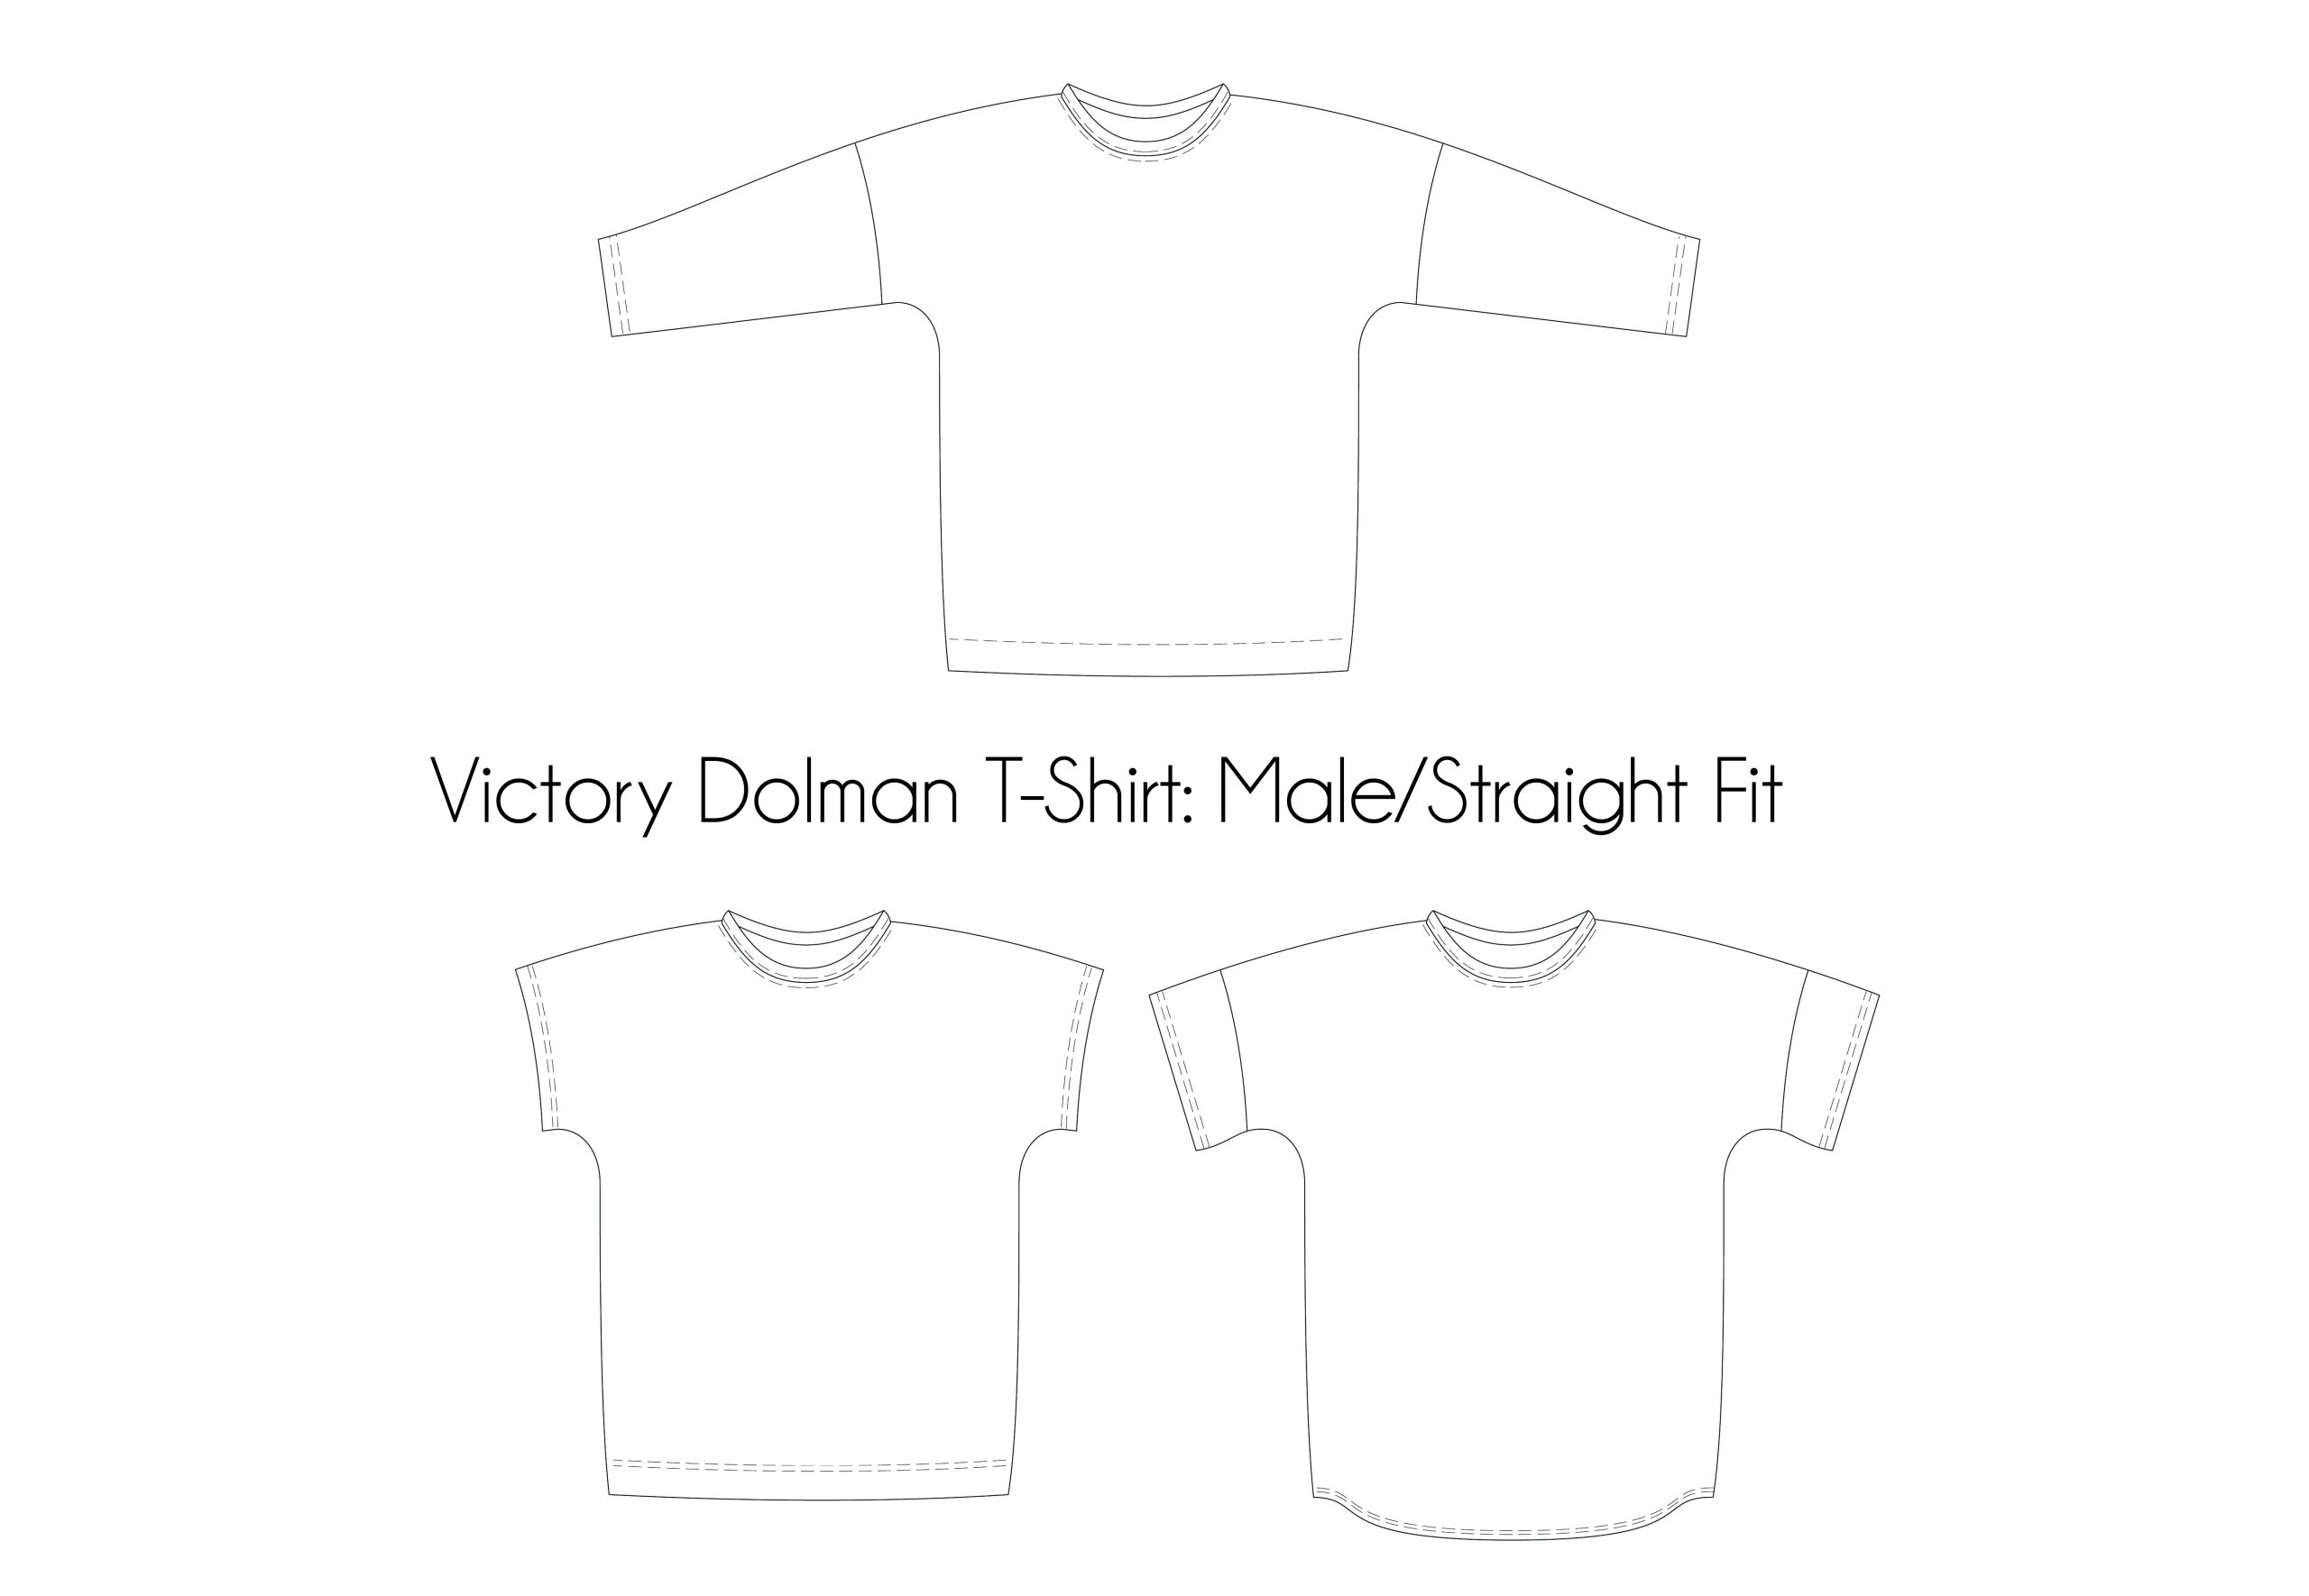 Waves & Wild Men's Victory Dolman T-shirt